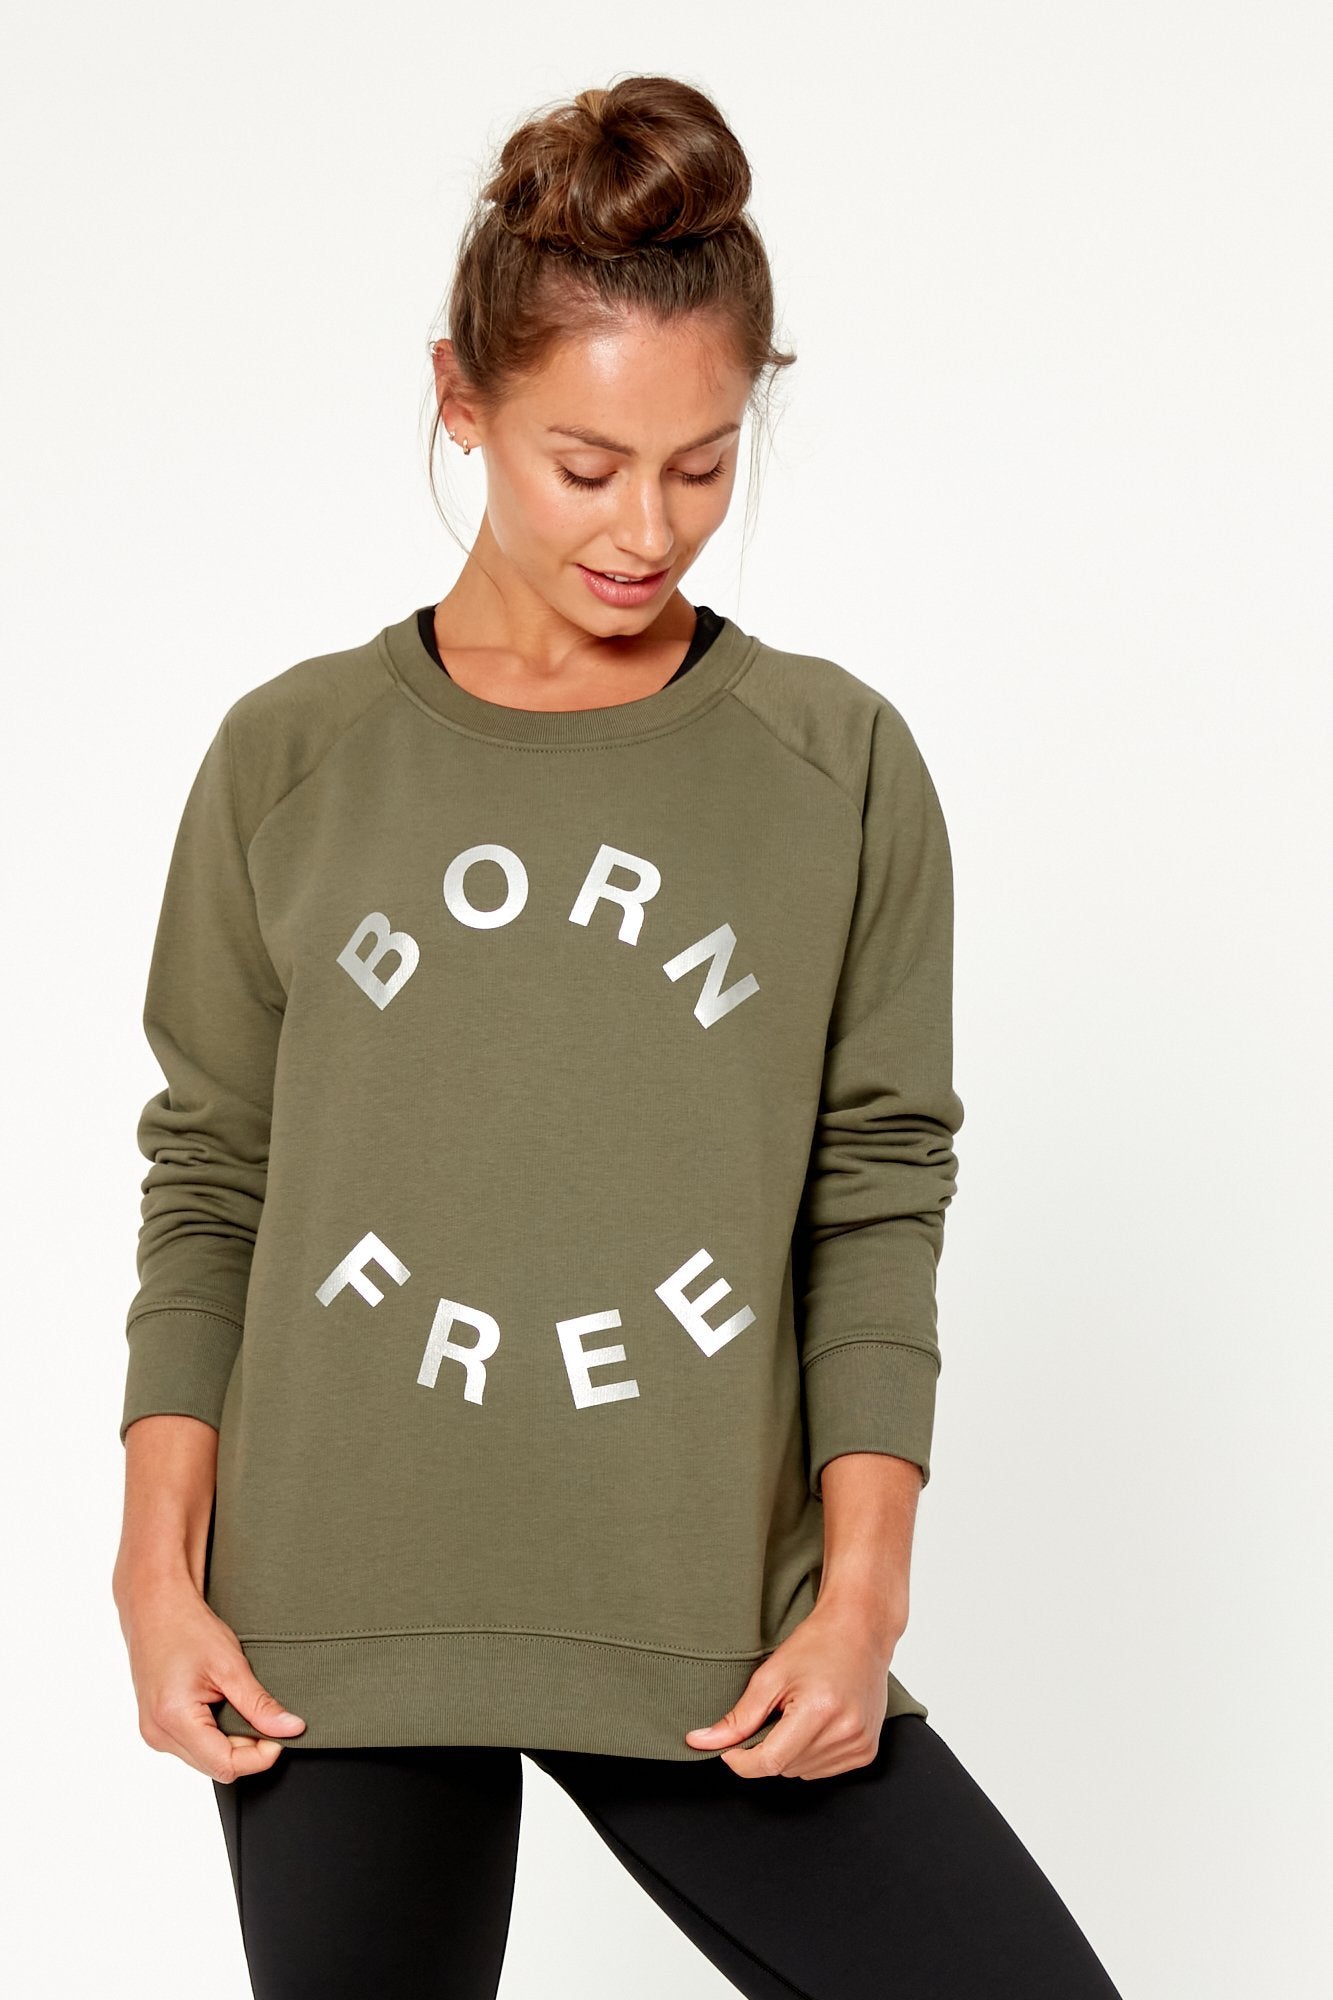 Olive Green Crew Neck Sweatshirt - Fair Wear & Peta Vegan Certified by Born Nouli